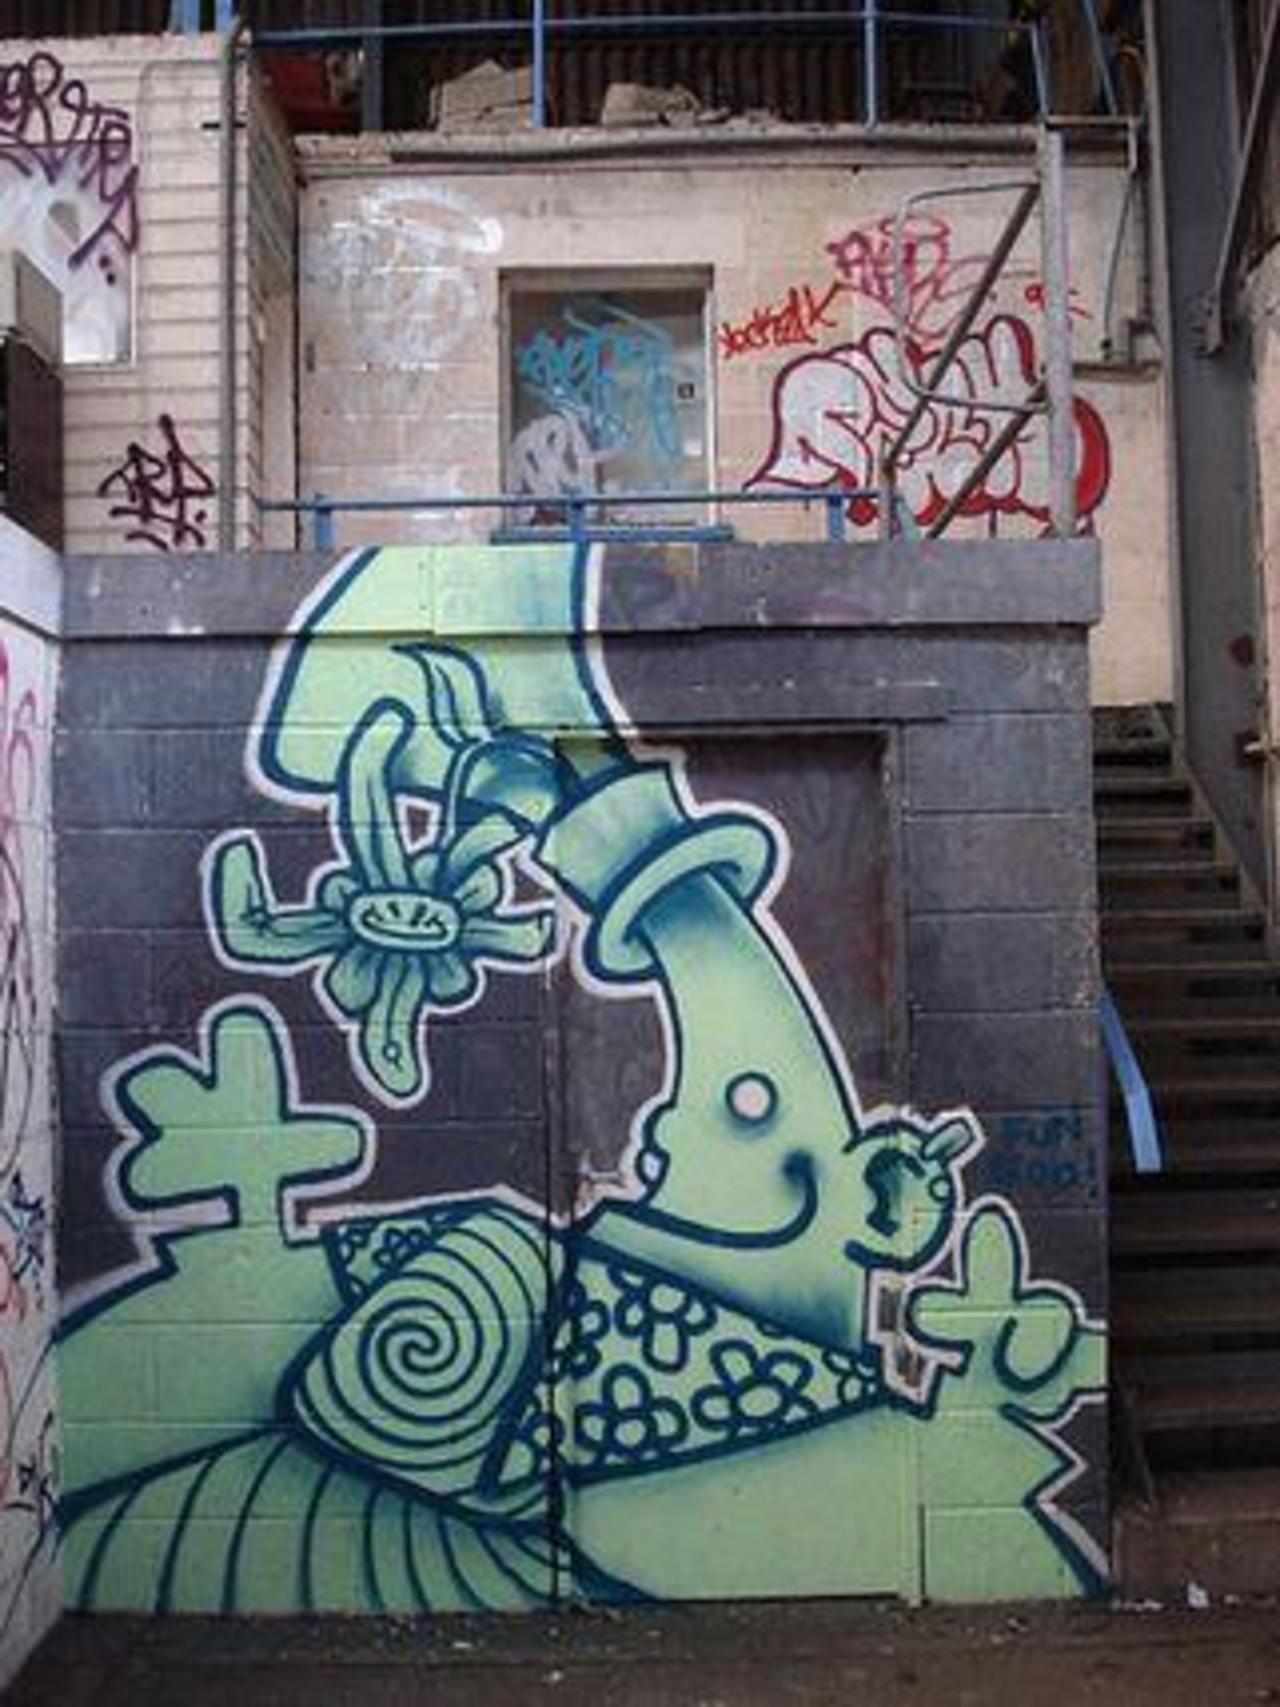 That Funky Underground!  • #streetart #graffiti #art #funky #dope . : http://t.co/4SF0XR2Mnm